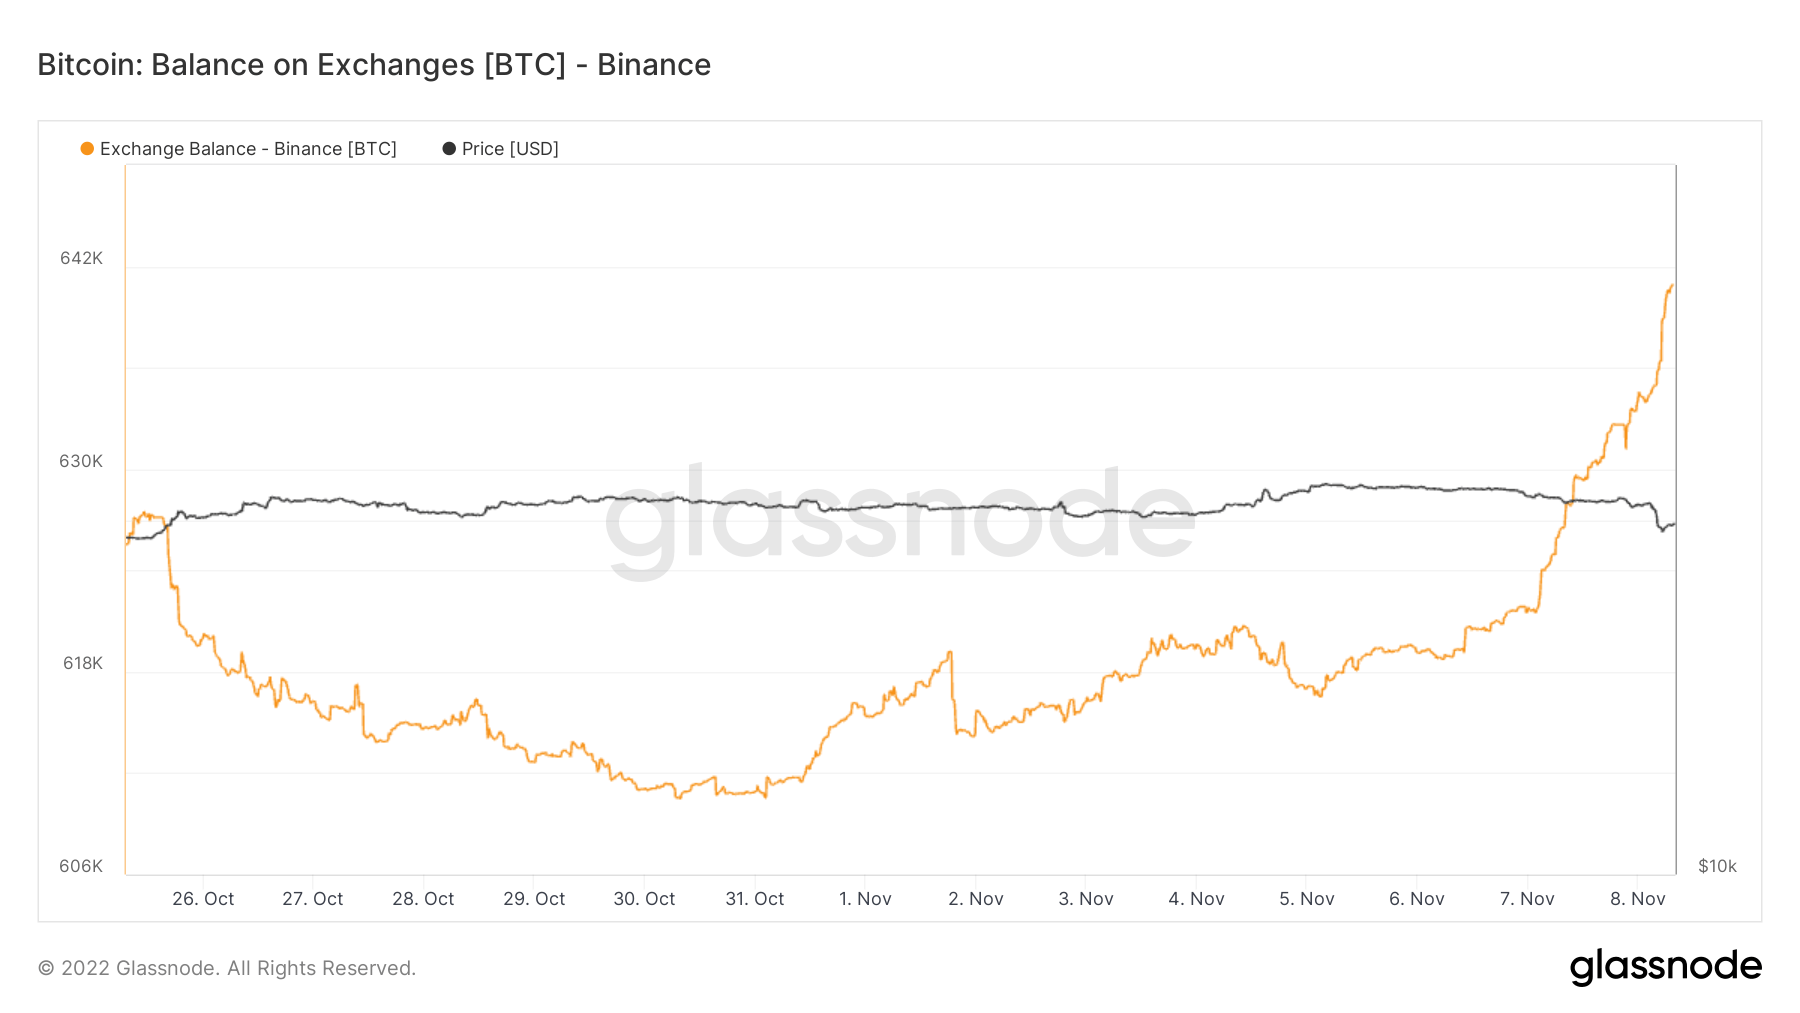 Binance Bitcoin balance from October to November 2022